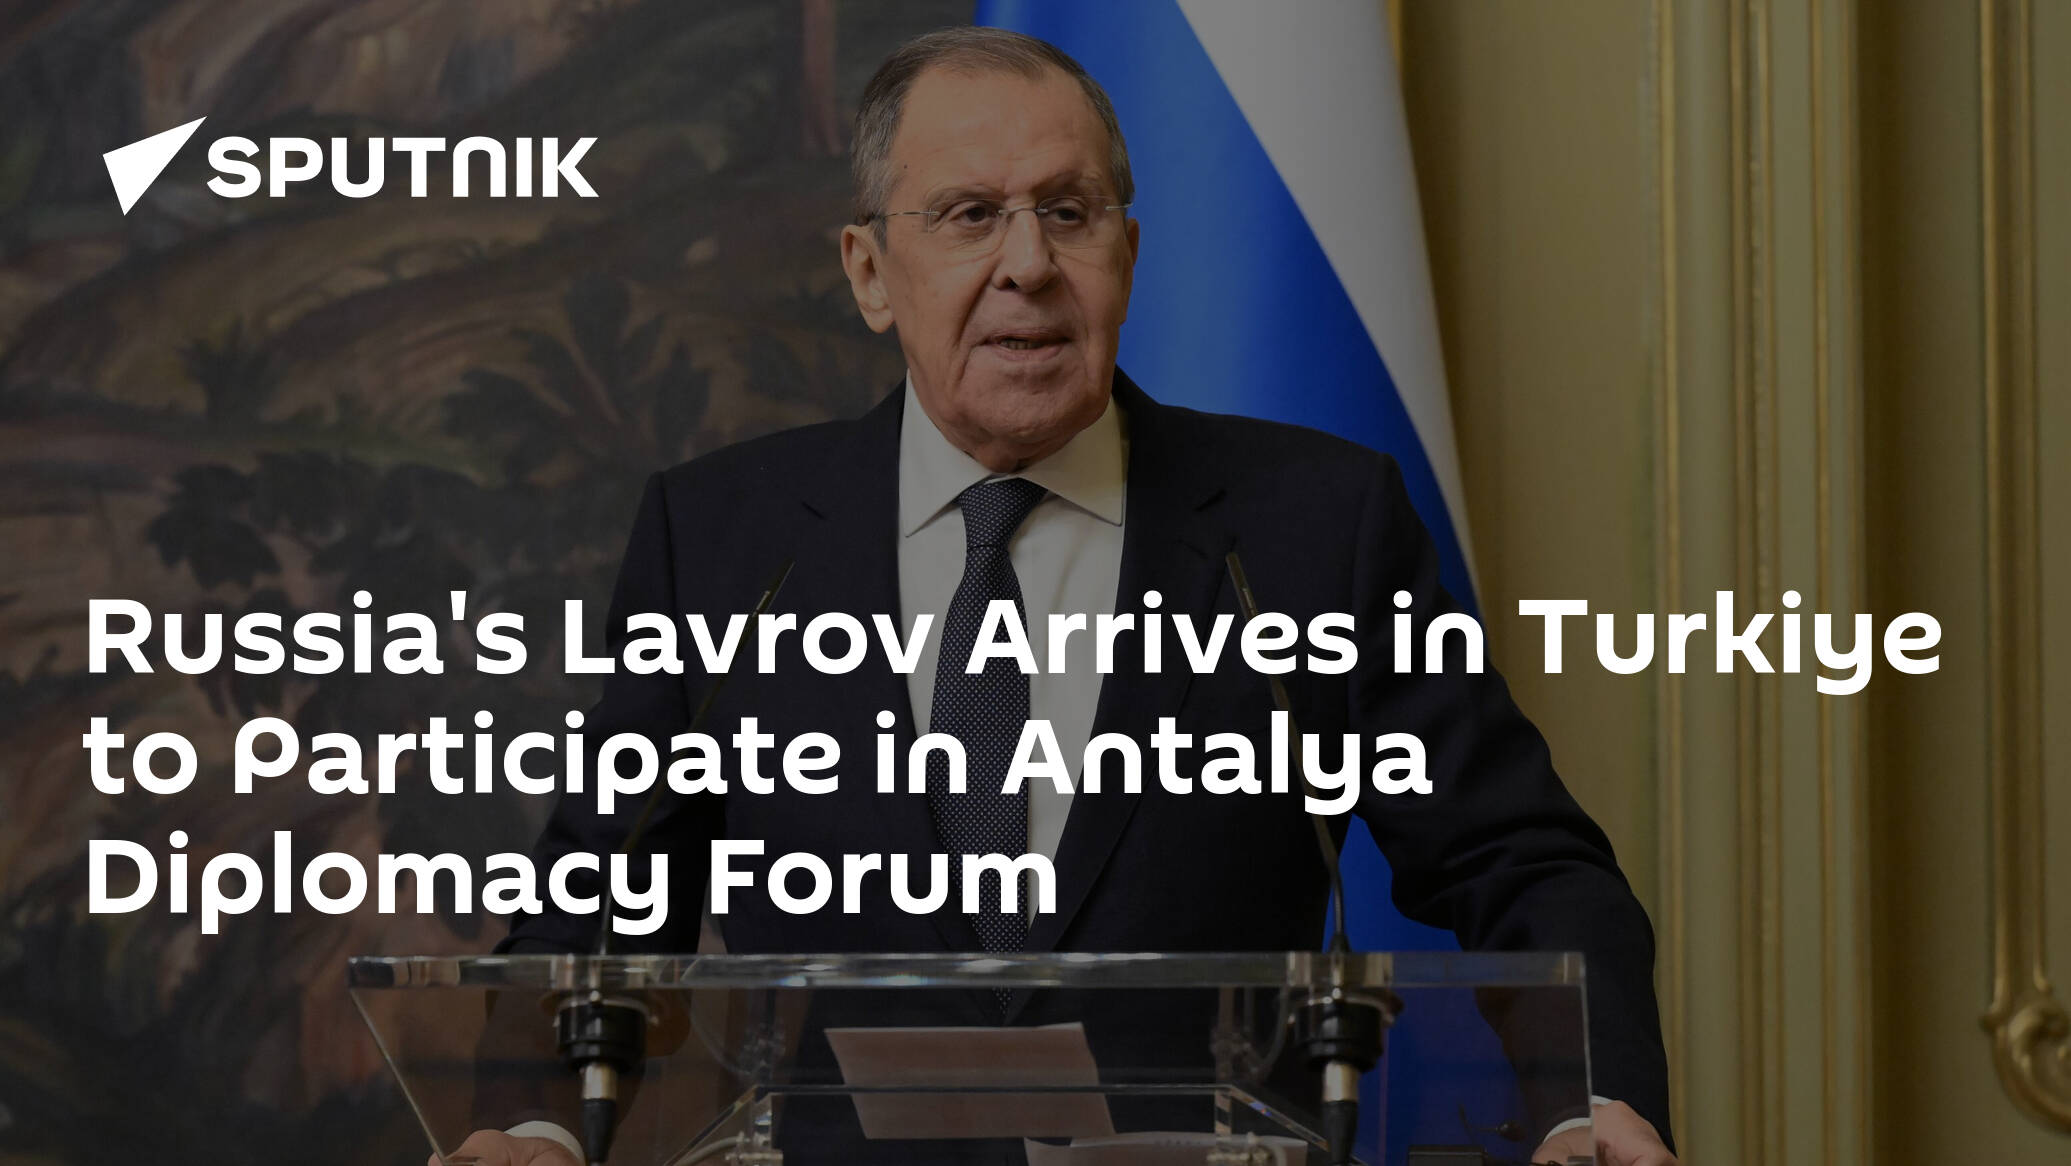 Russia's Lavrov Arrives in Turkiye to Participate in Antalya Diplomacy Forum